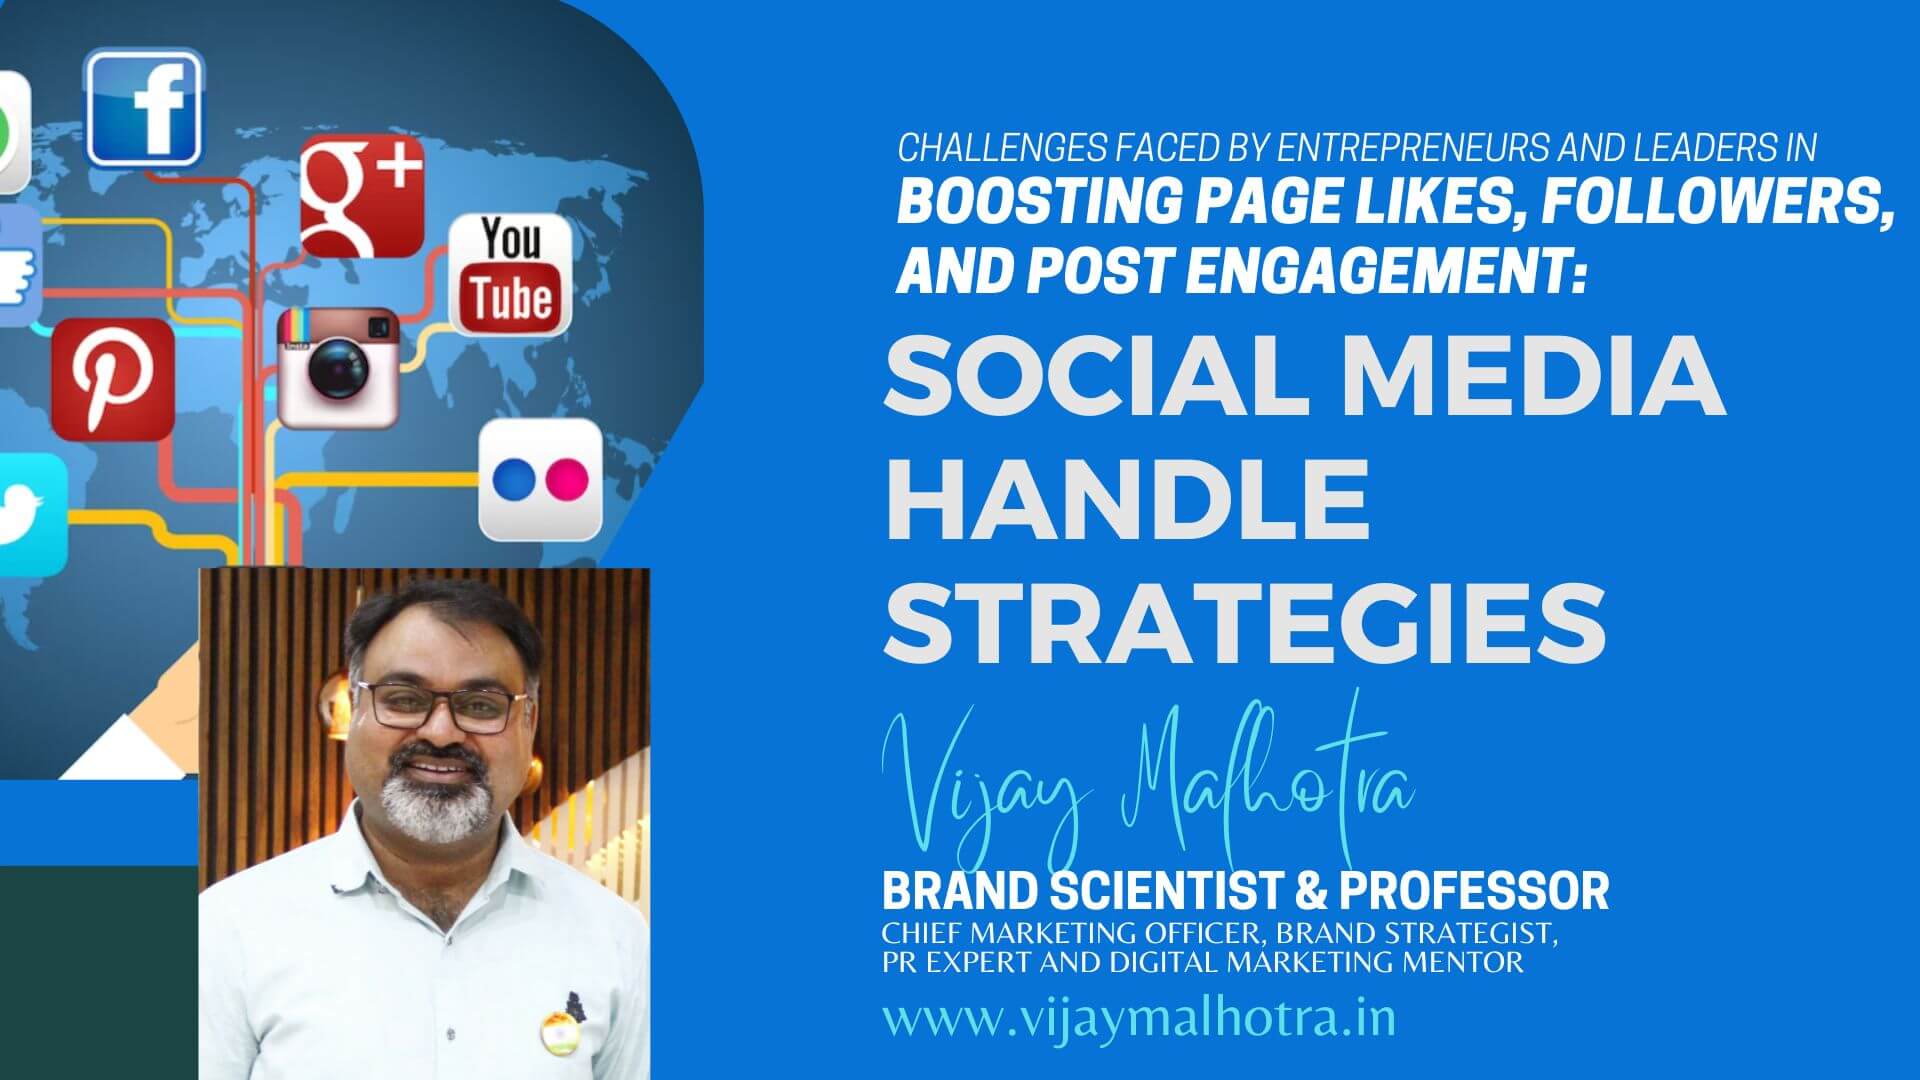 Social Media Handles Strategies by Vijay Malhotra